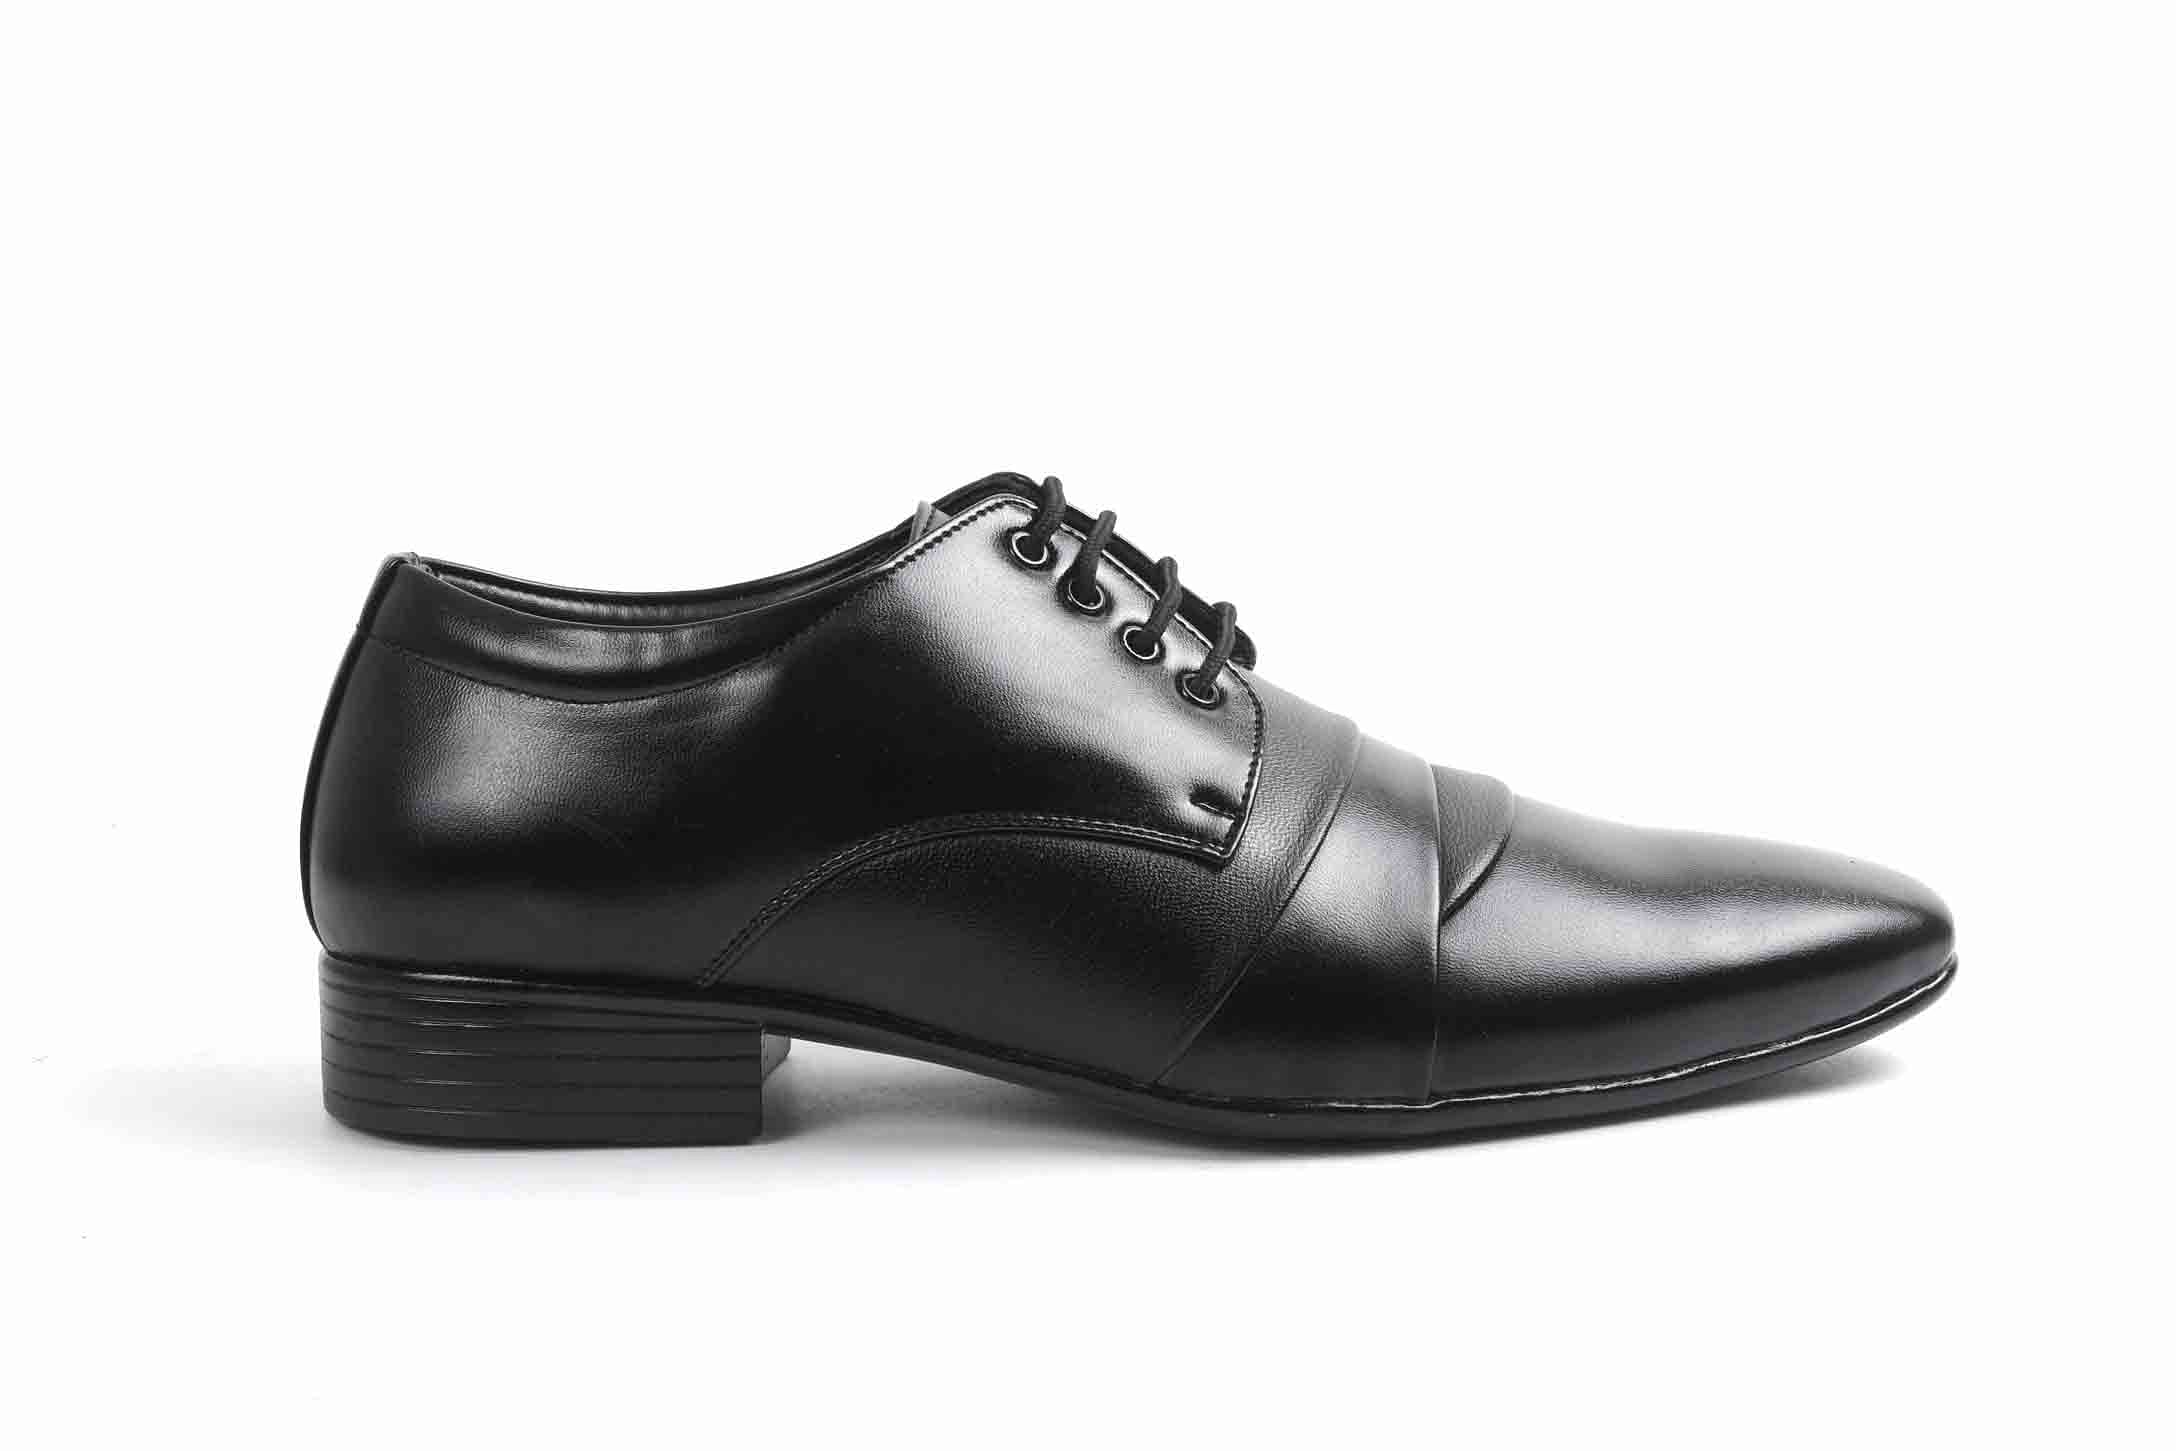 Pair-it Men derby Formal Shoes - Black - LZ-RYDER103